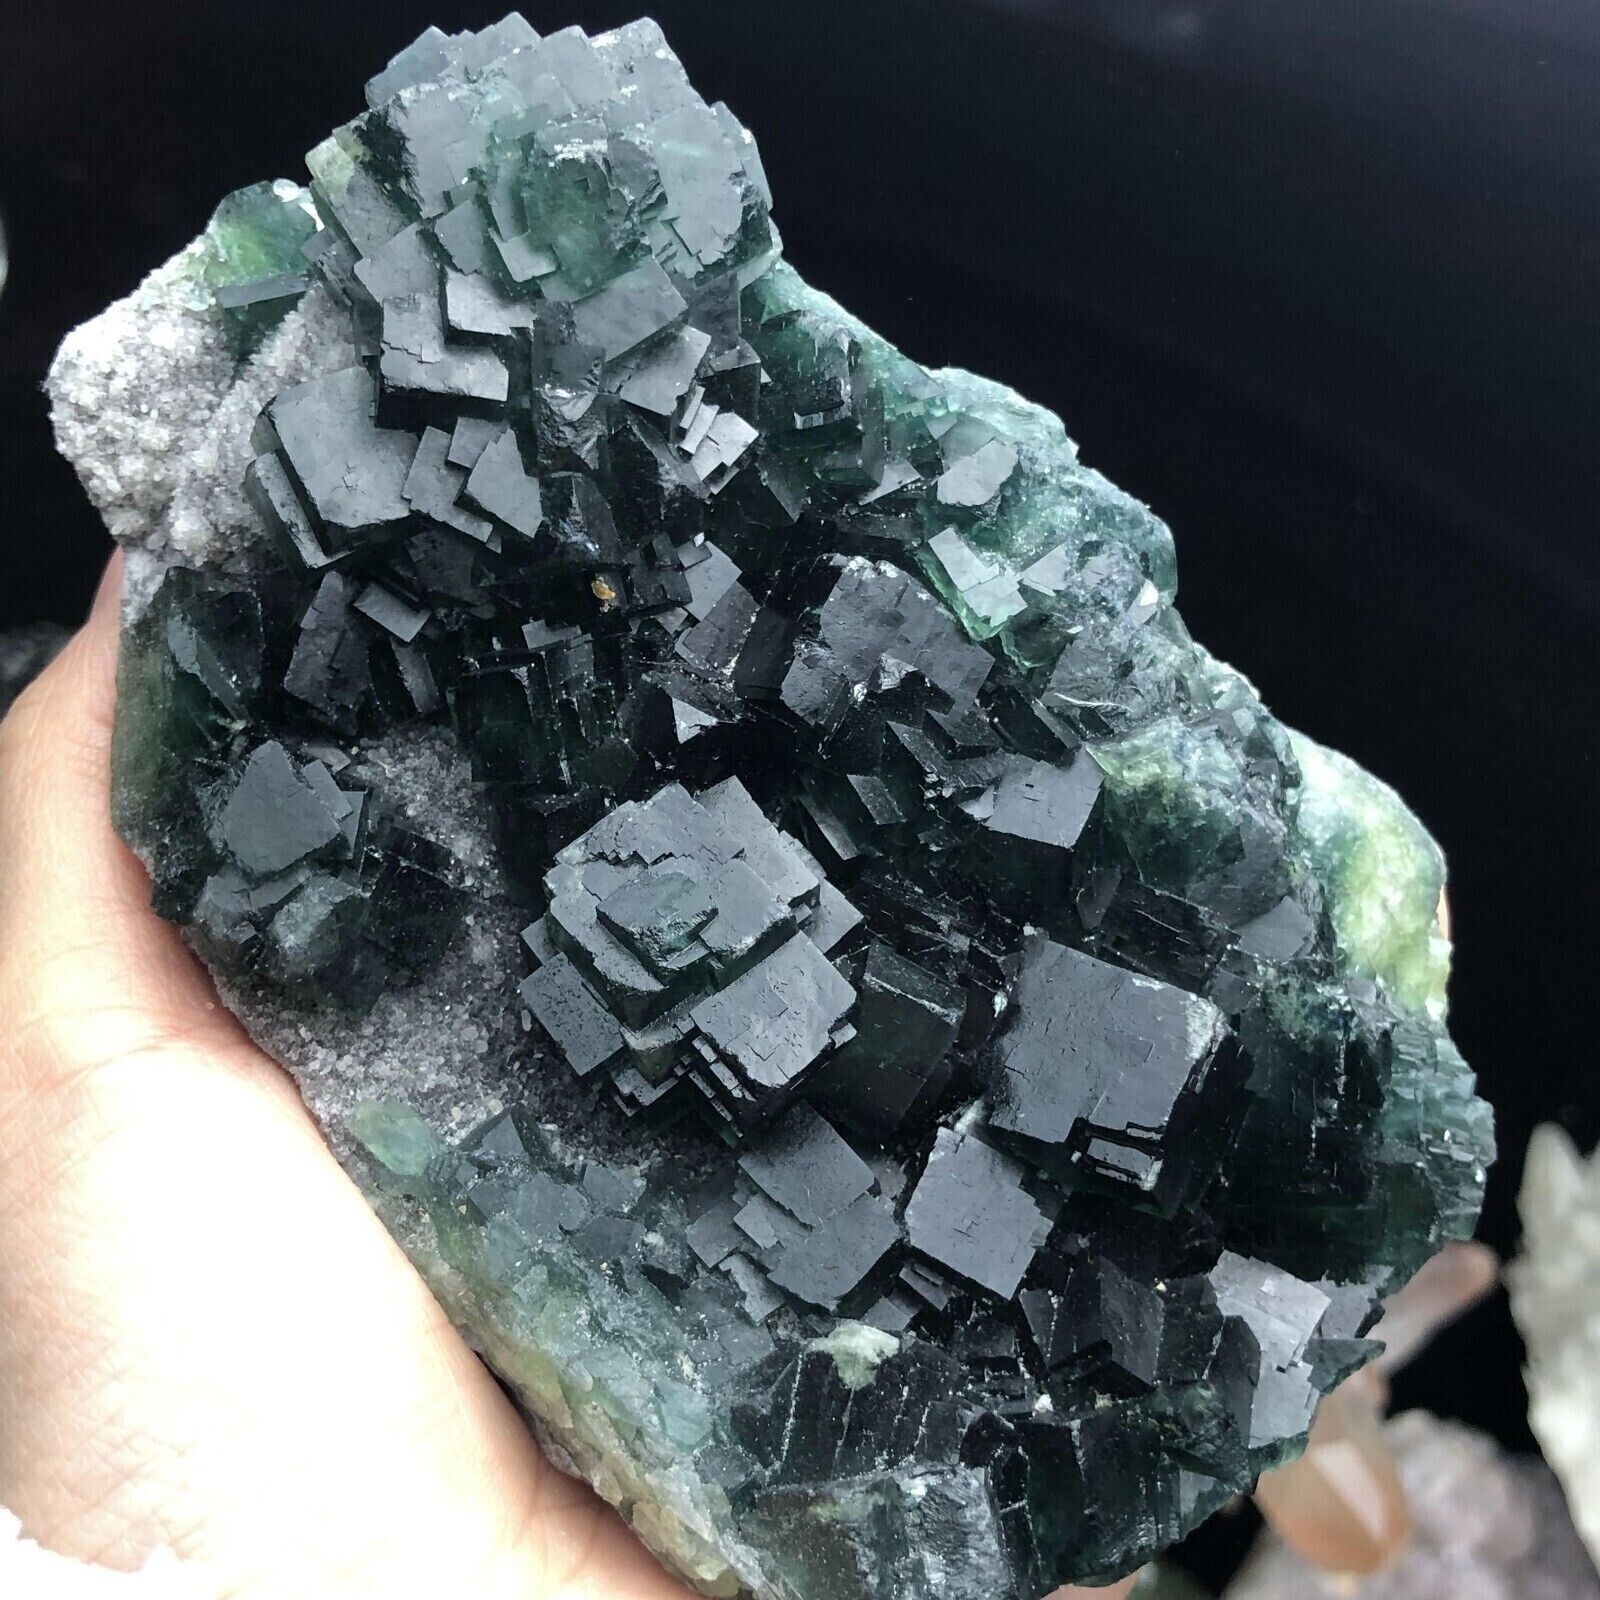 514g Translucent Deep Green Cube Fluorite Crystal on the Quartz Mineral Specimen